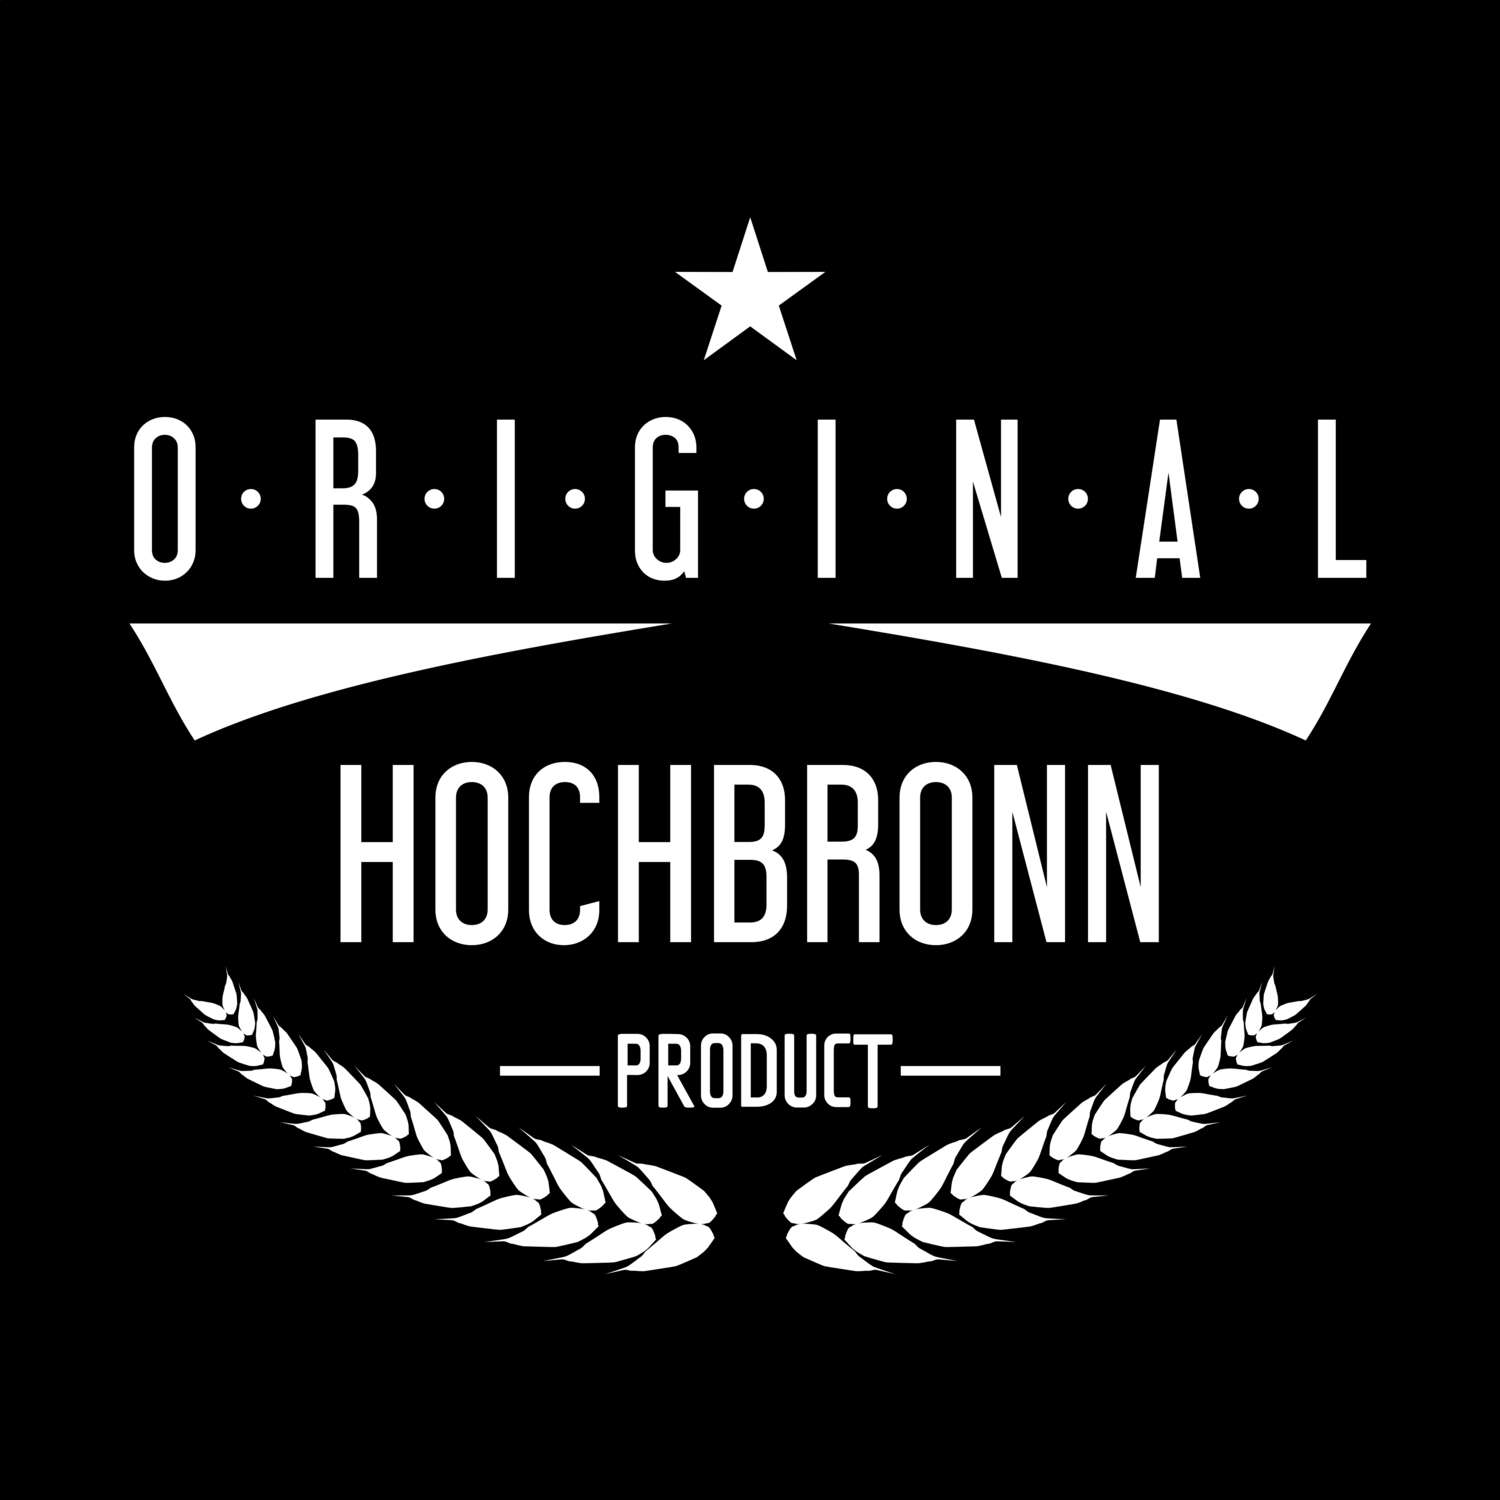 Hochbronn T-Shirt »Original Product«